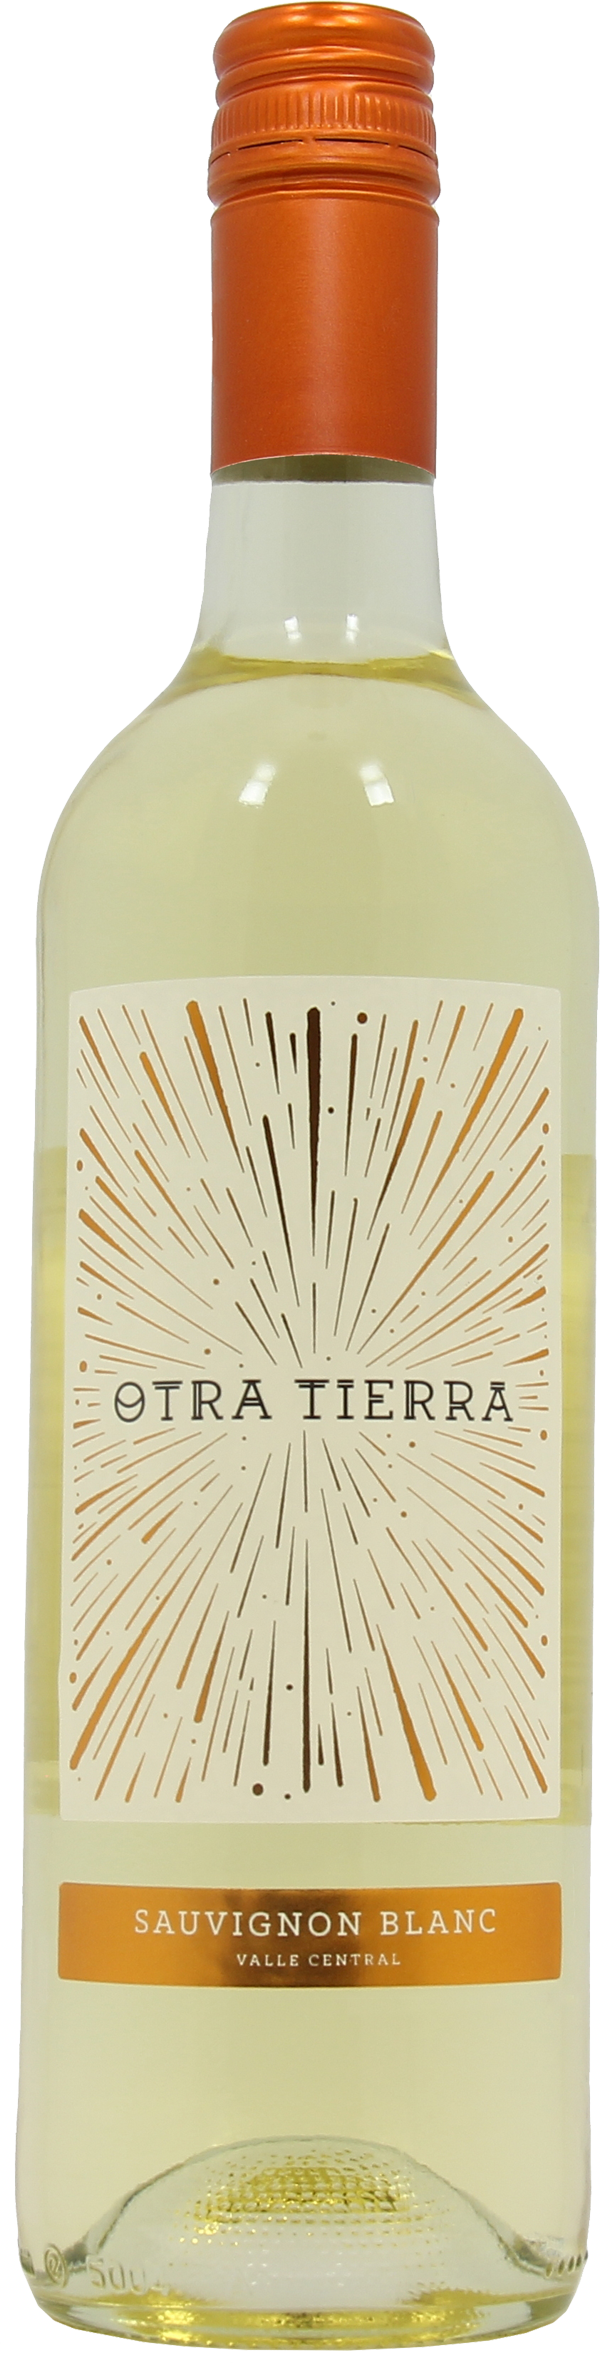 Otra Tierra Sauvignon Blanc (600x2363), Png Download